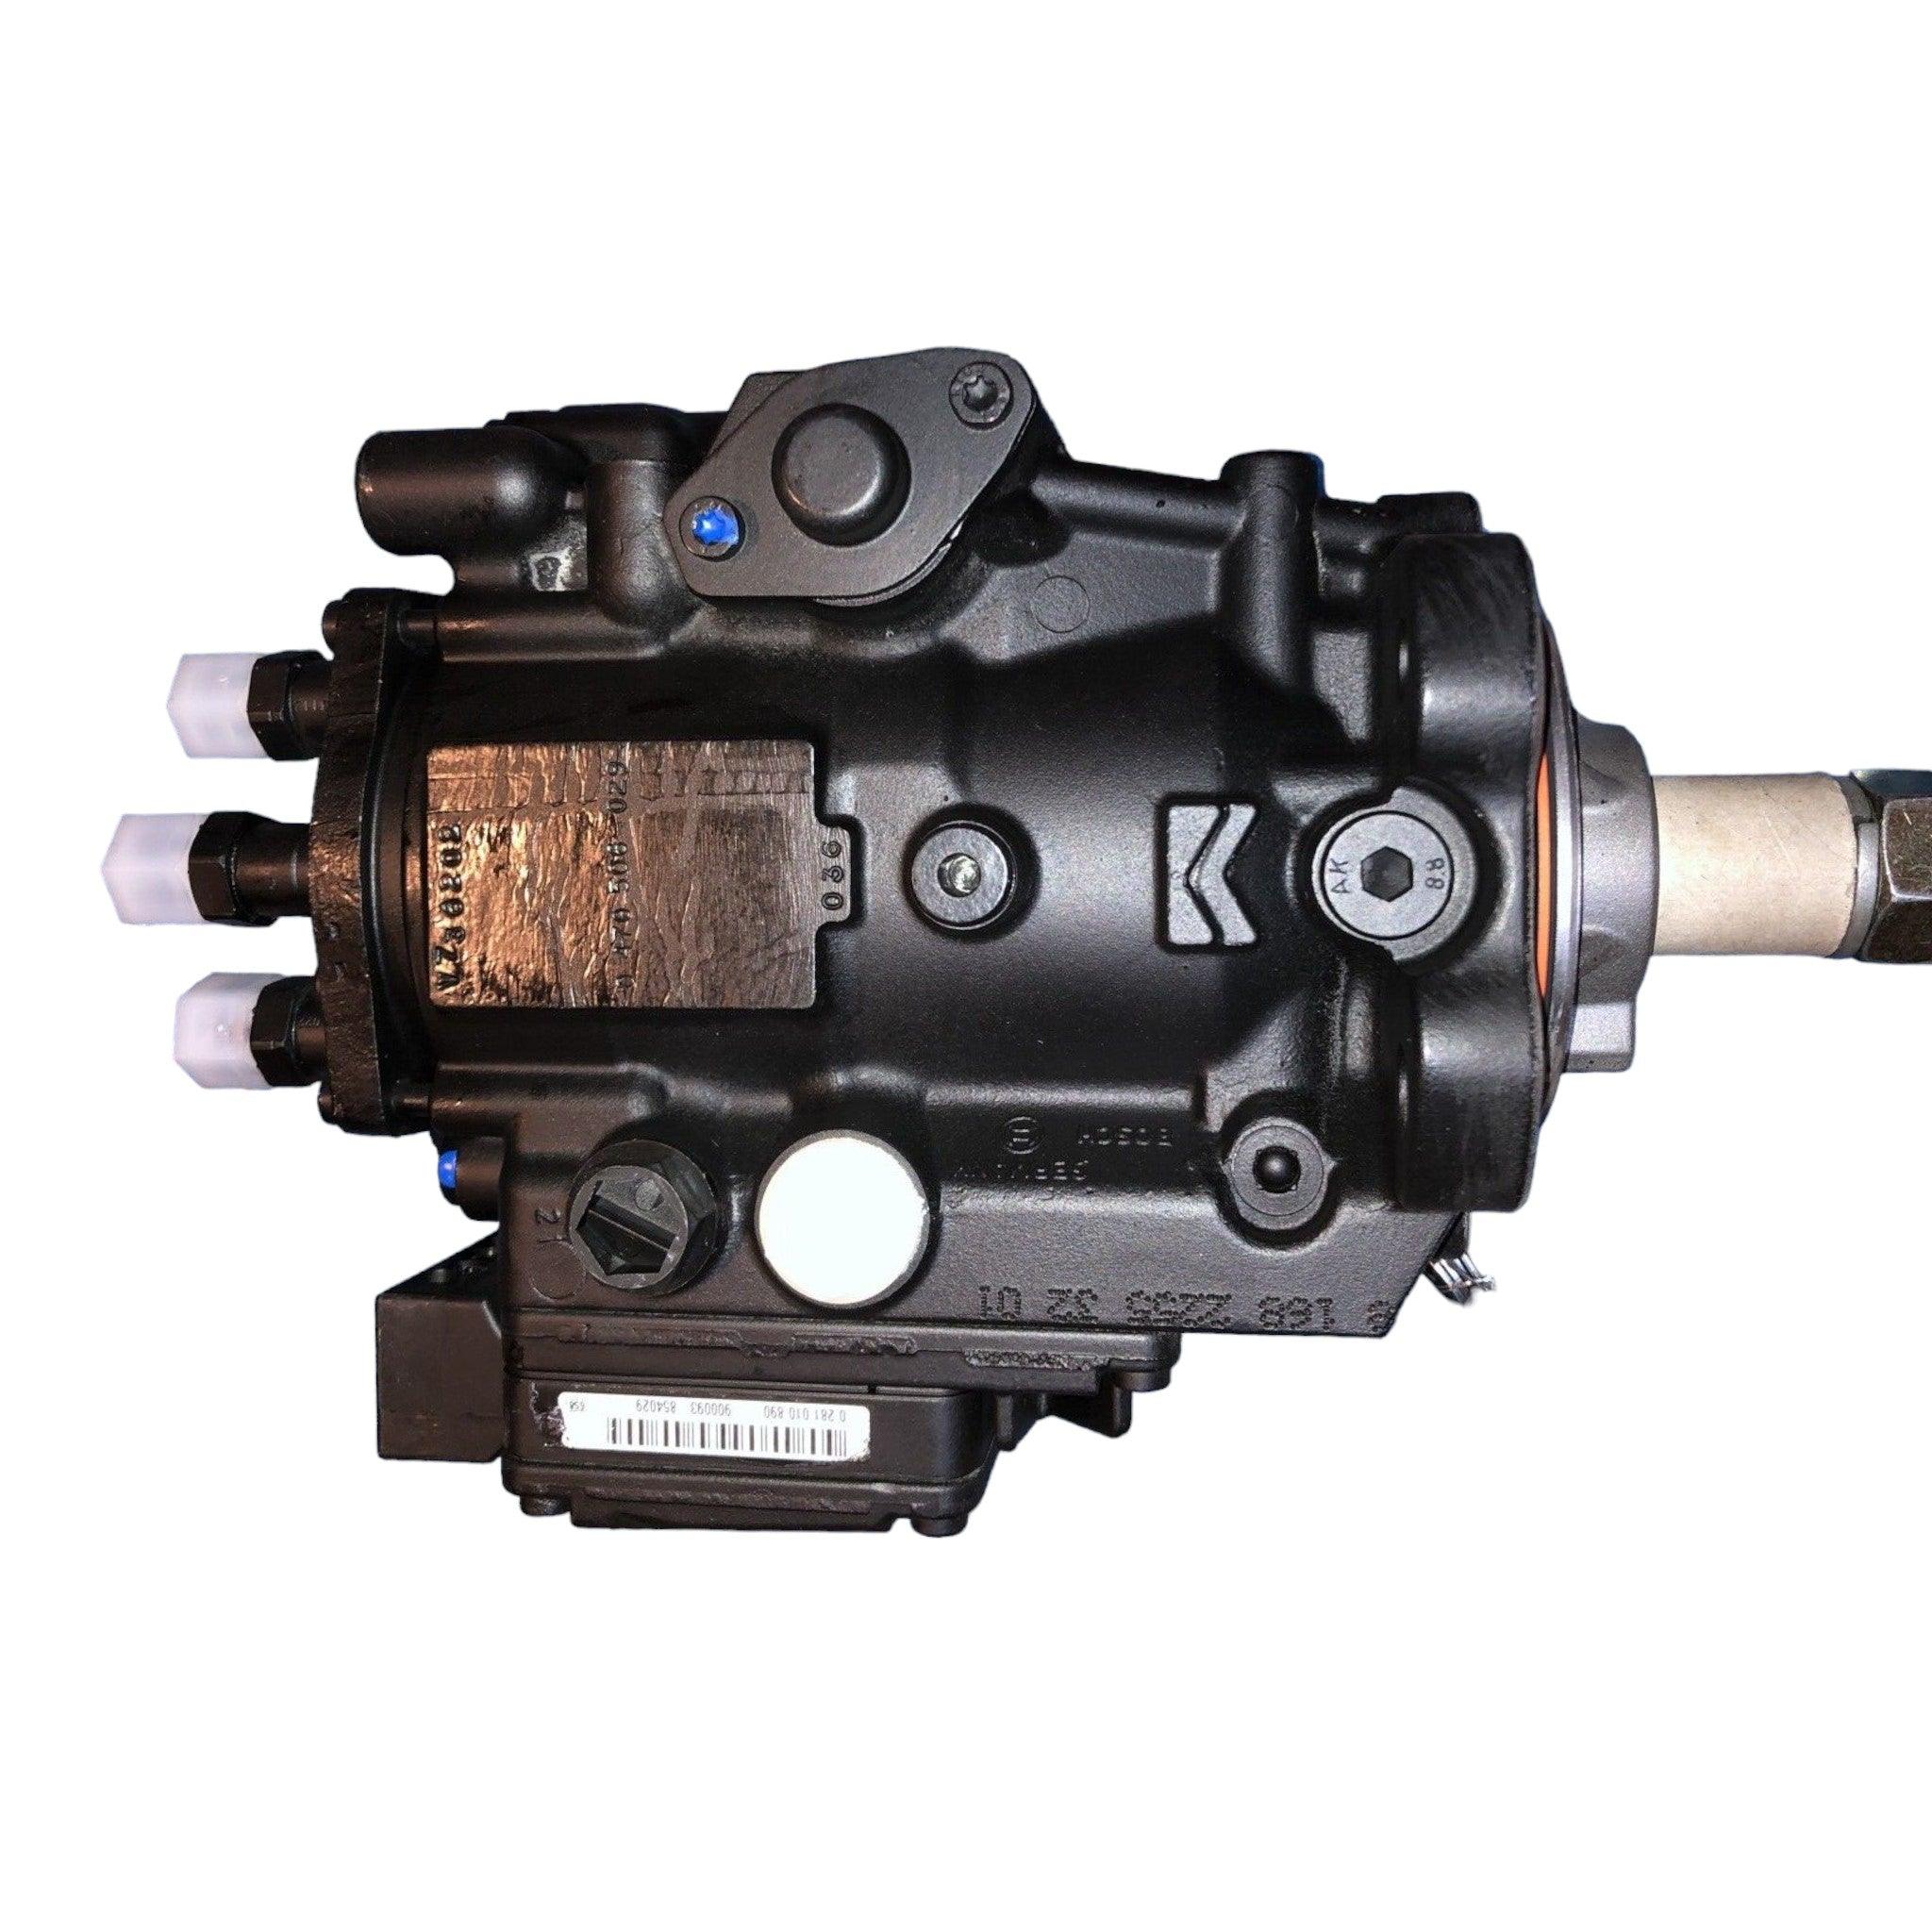 0-470-506-029 Genuine Cummins Fuel Pump Vp44 For Isb 5.9L - ADVANCED TRUCK PARTS